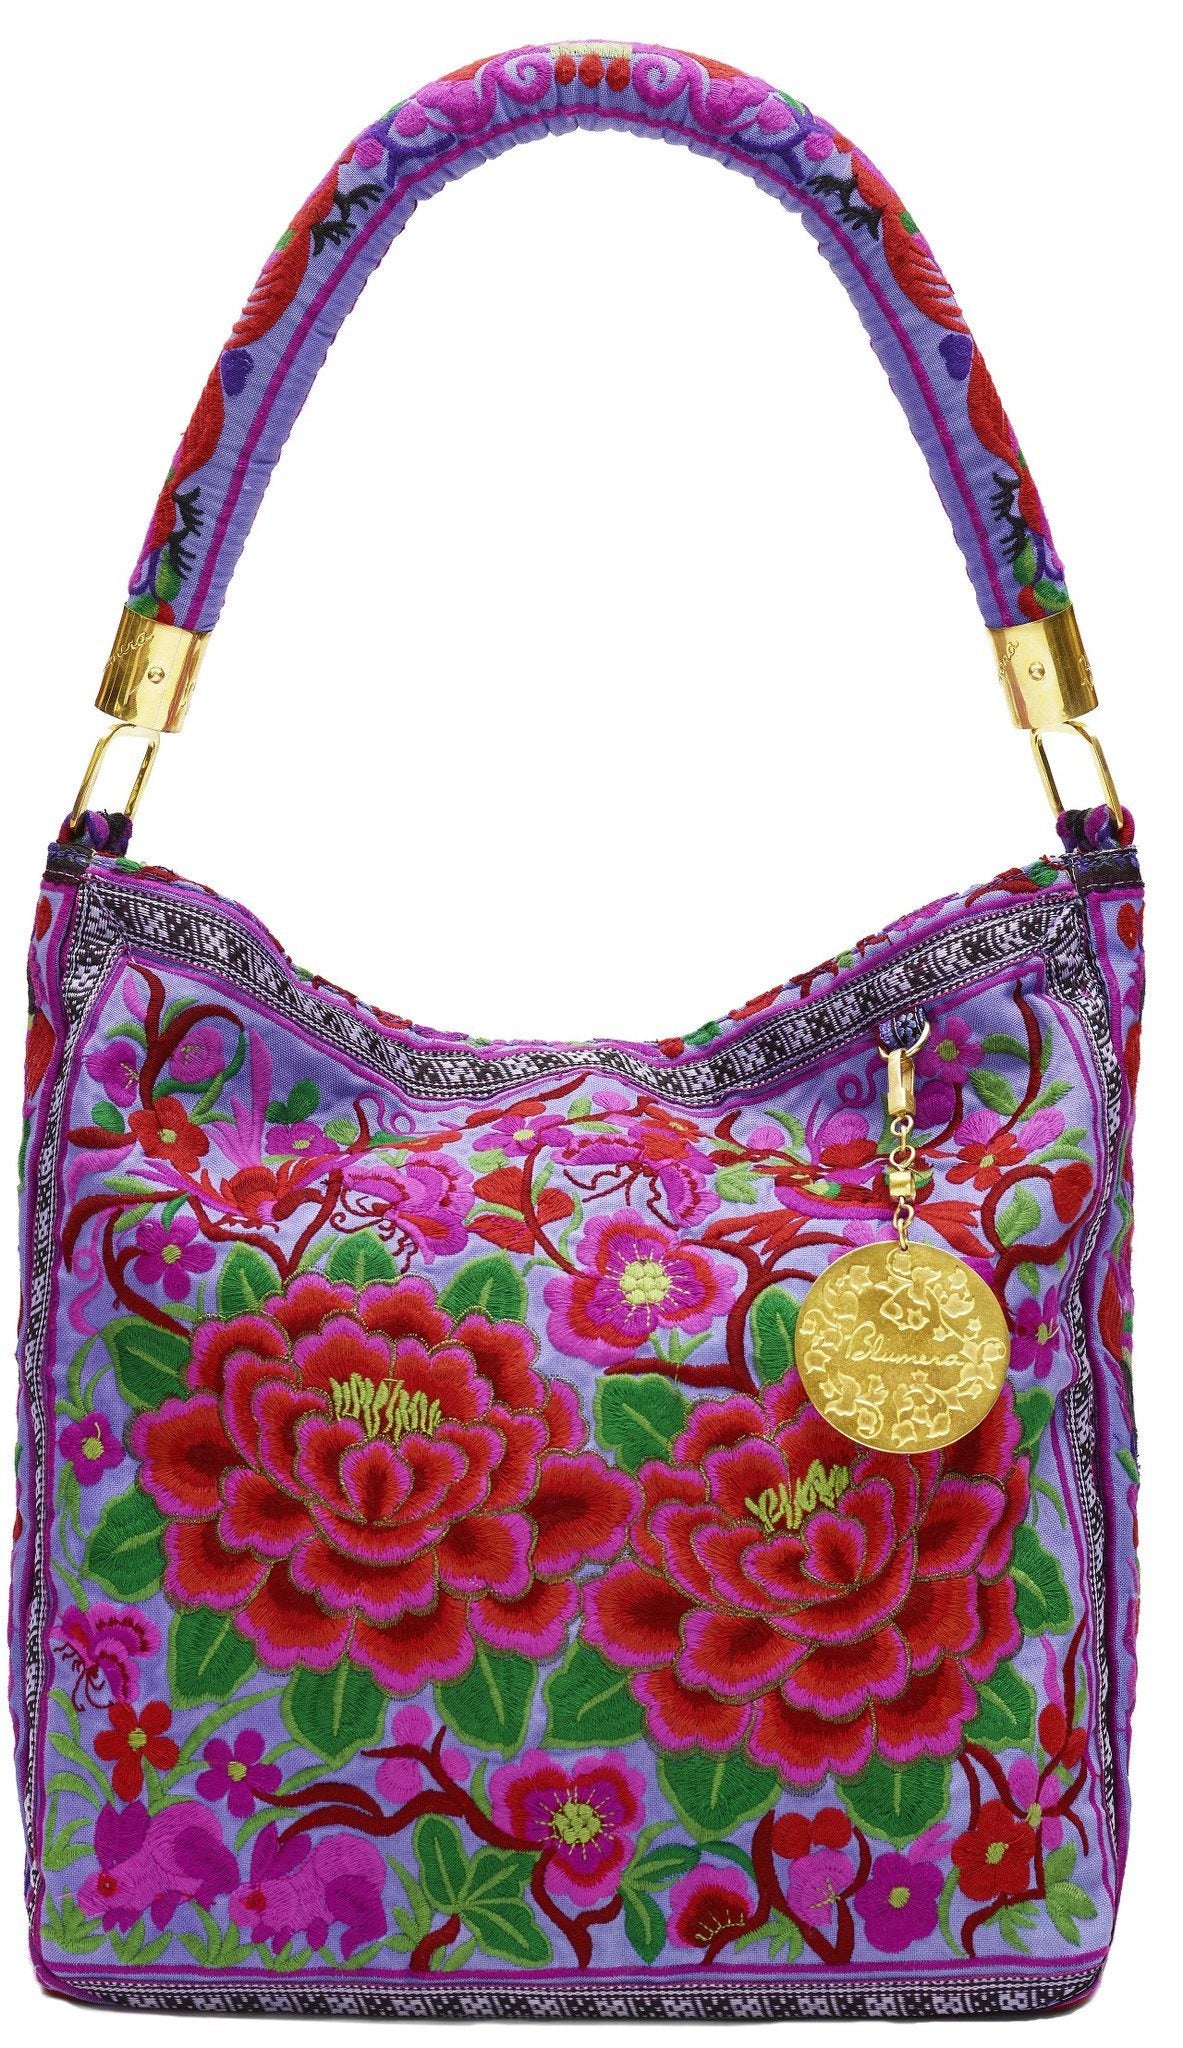 Nadine Purple Shoulder Bag - Blumera